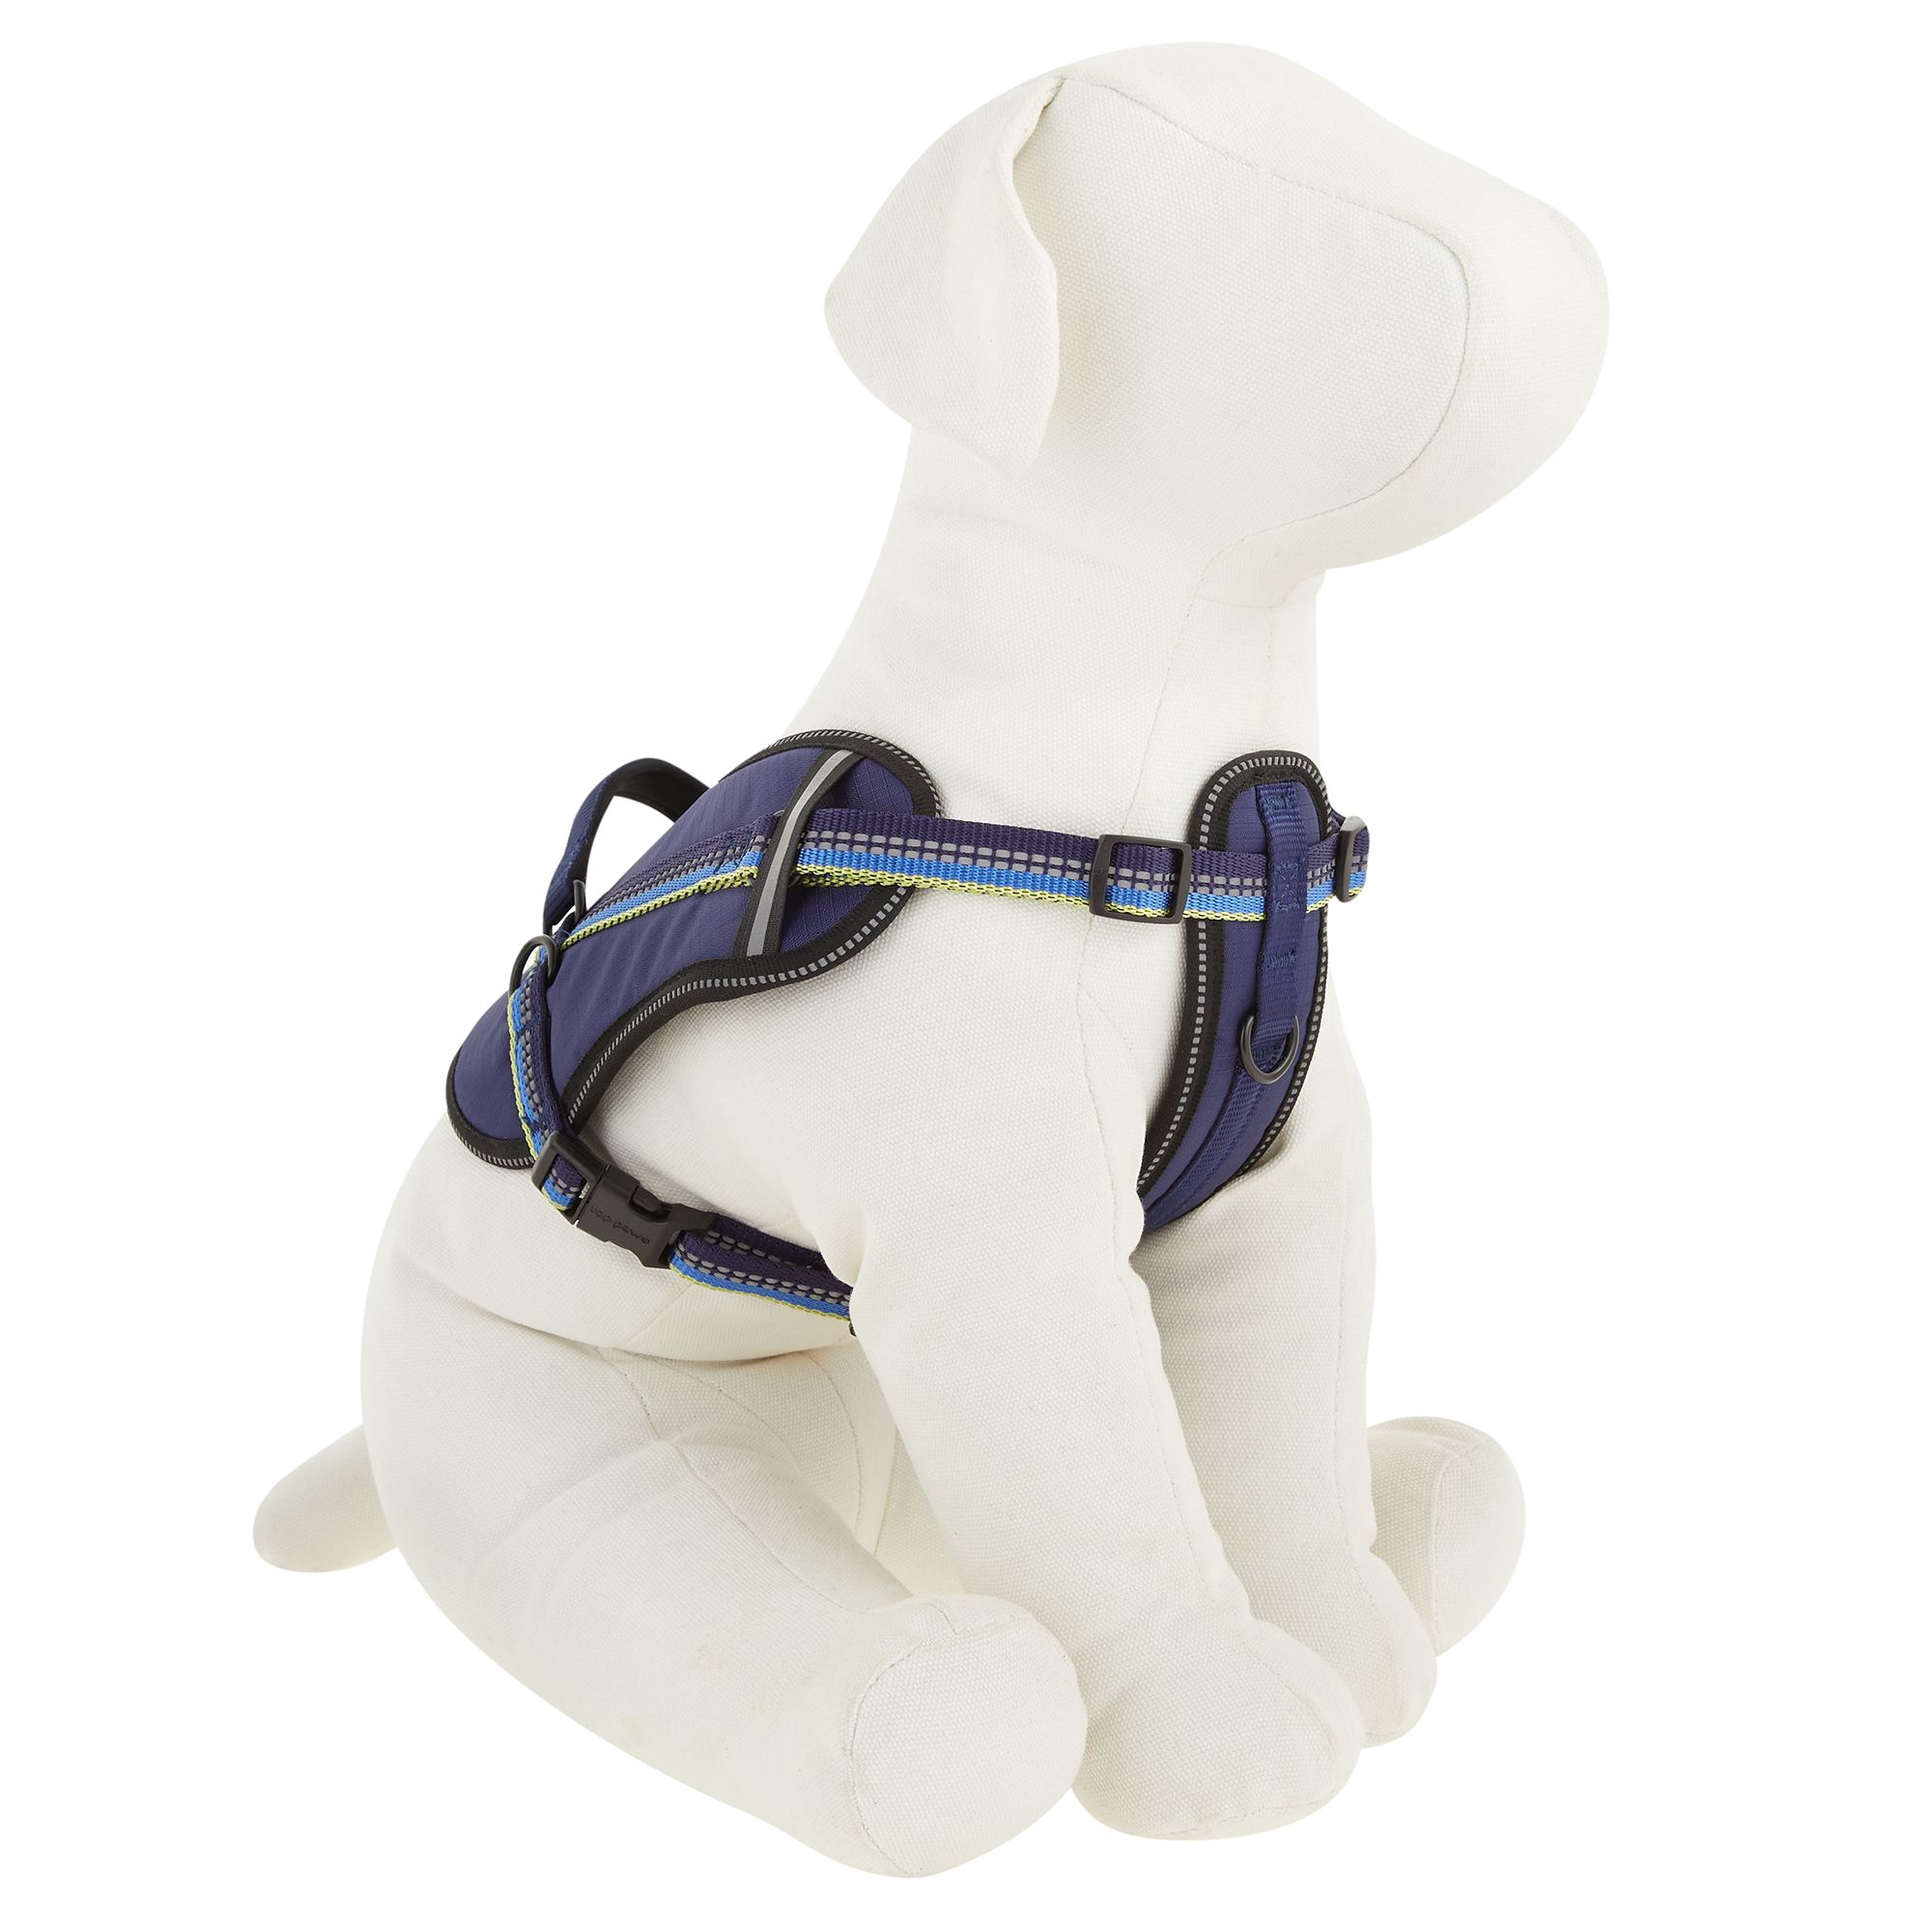 petsmart dog harness and leash